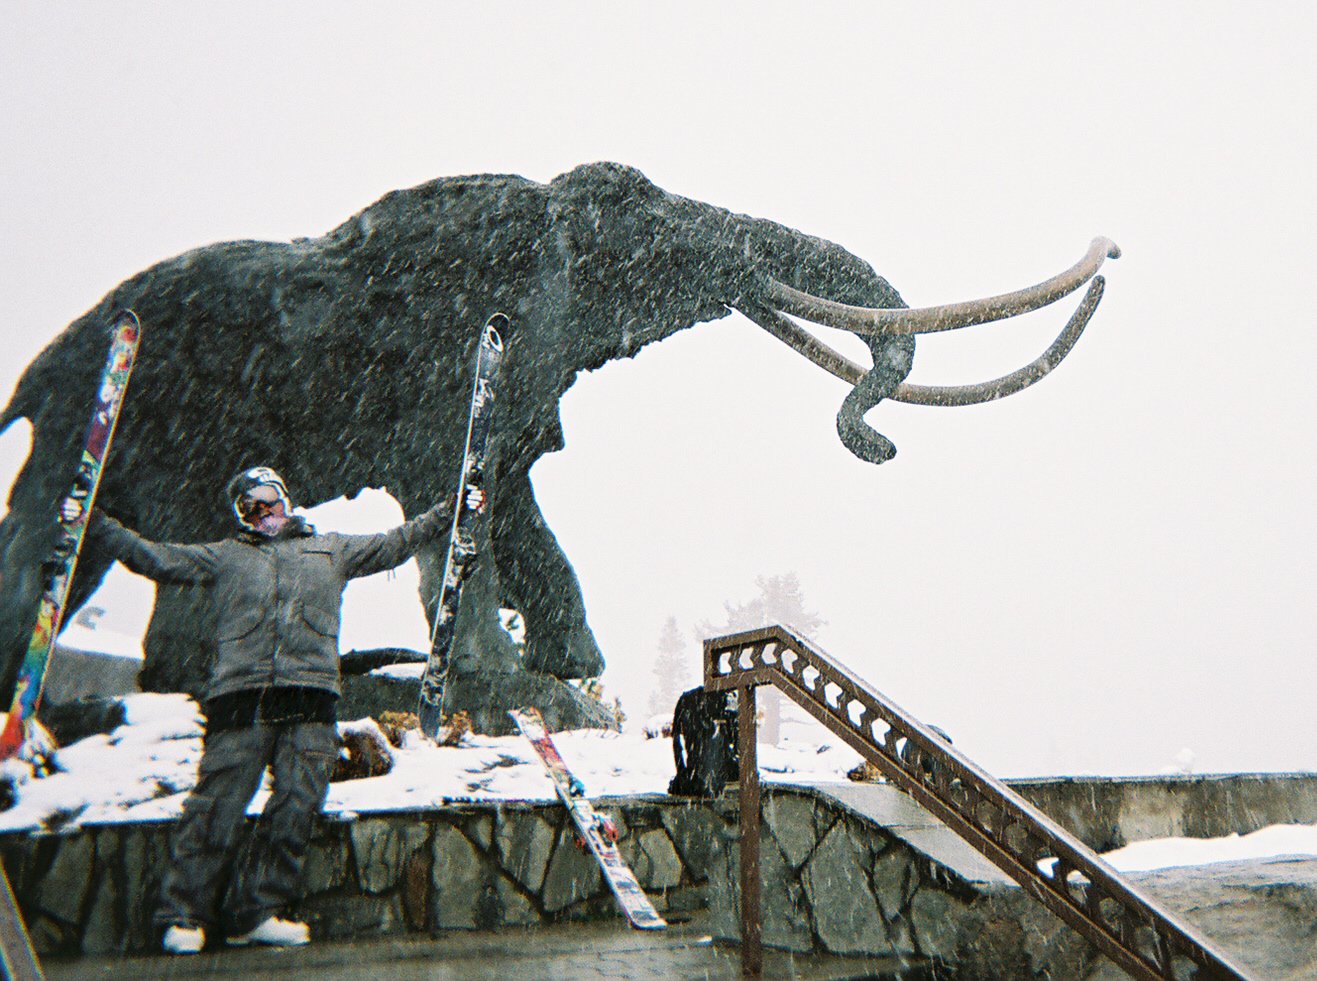 Memorial day at mammoth